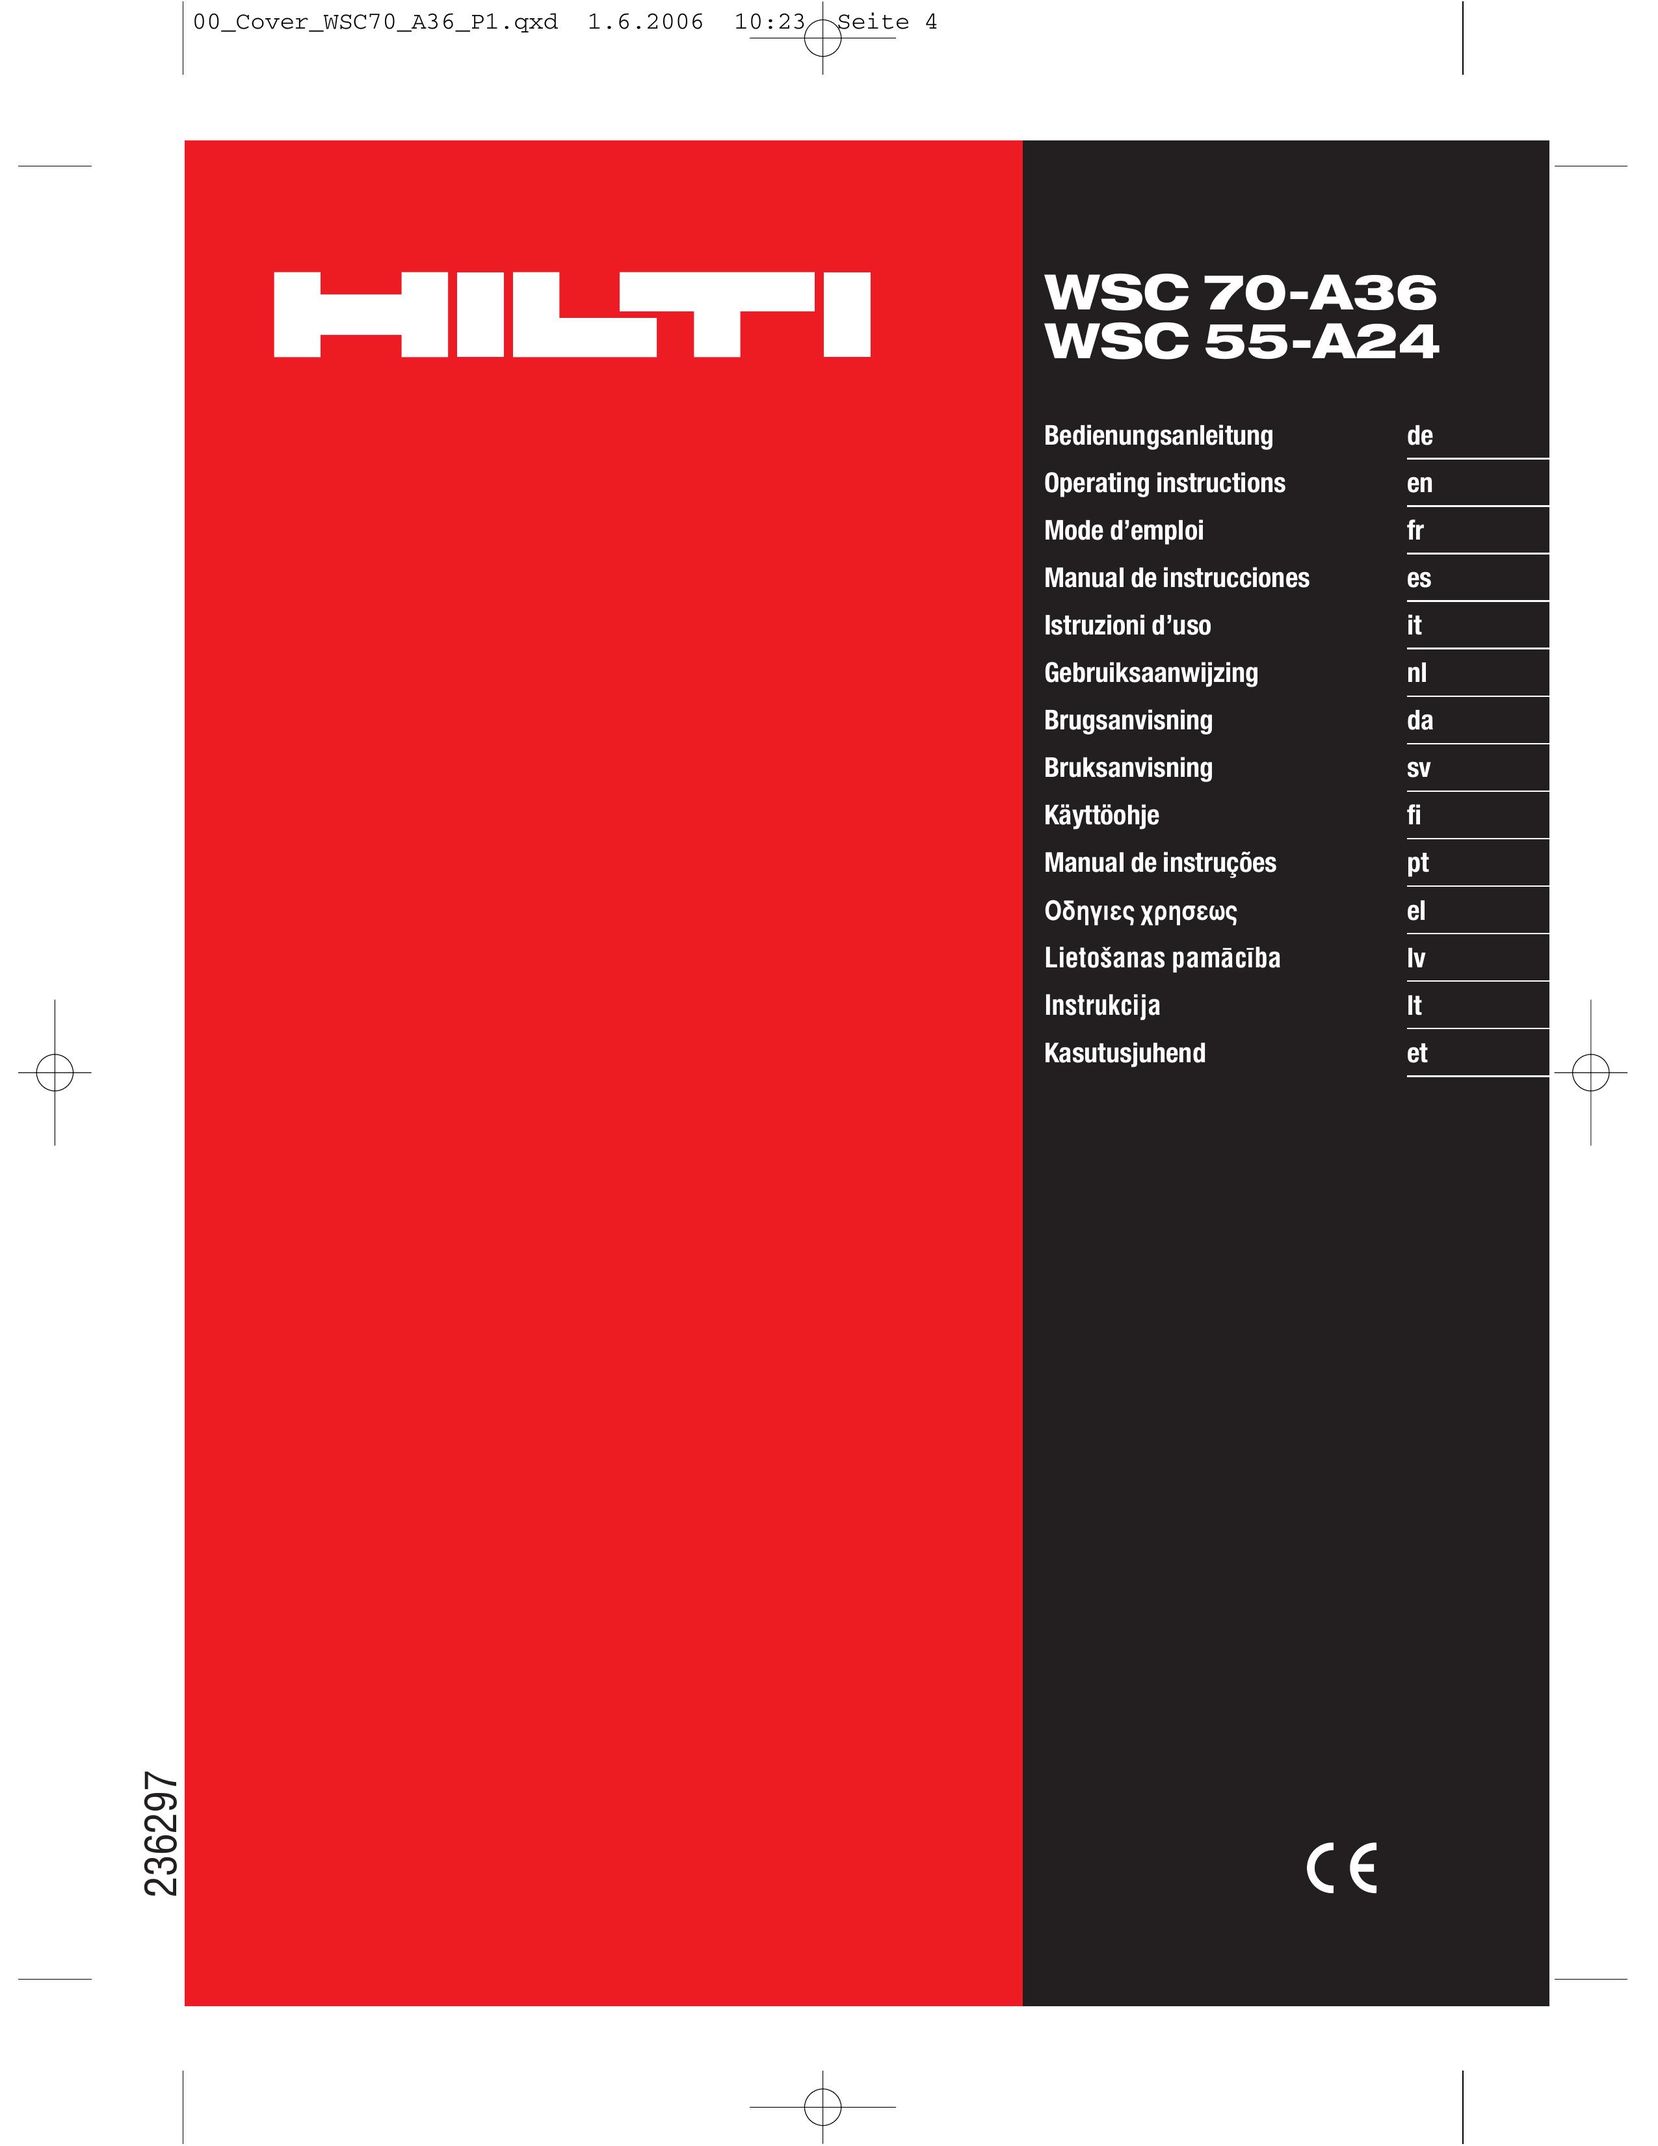 Hilti WSC 70-A36 Cordless Saw User Manual